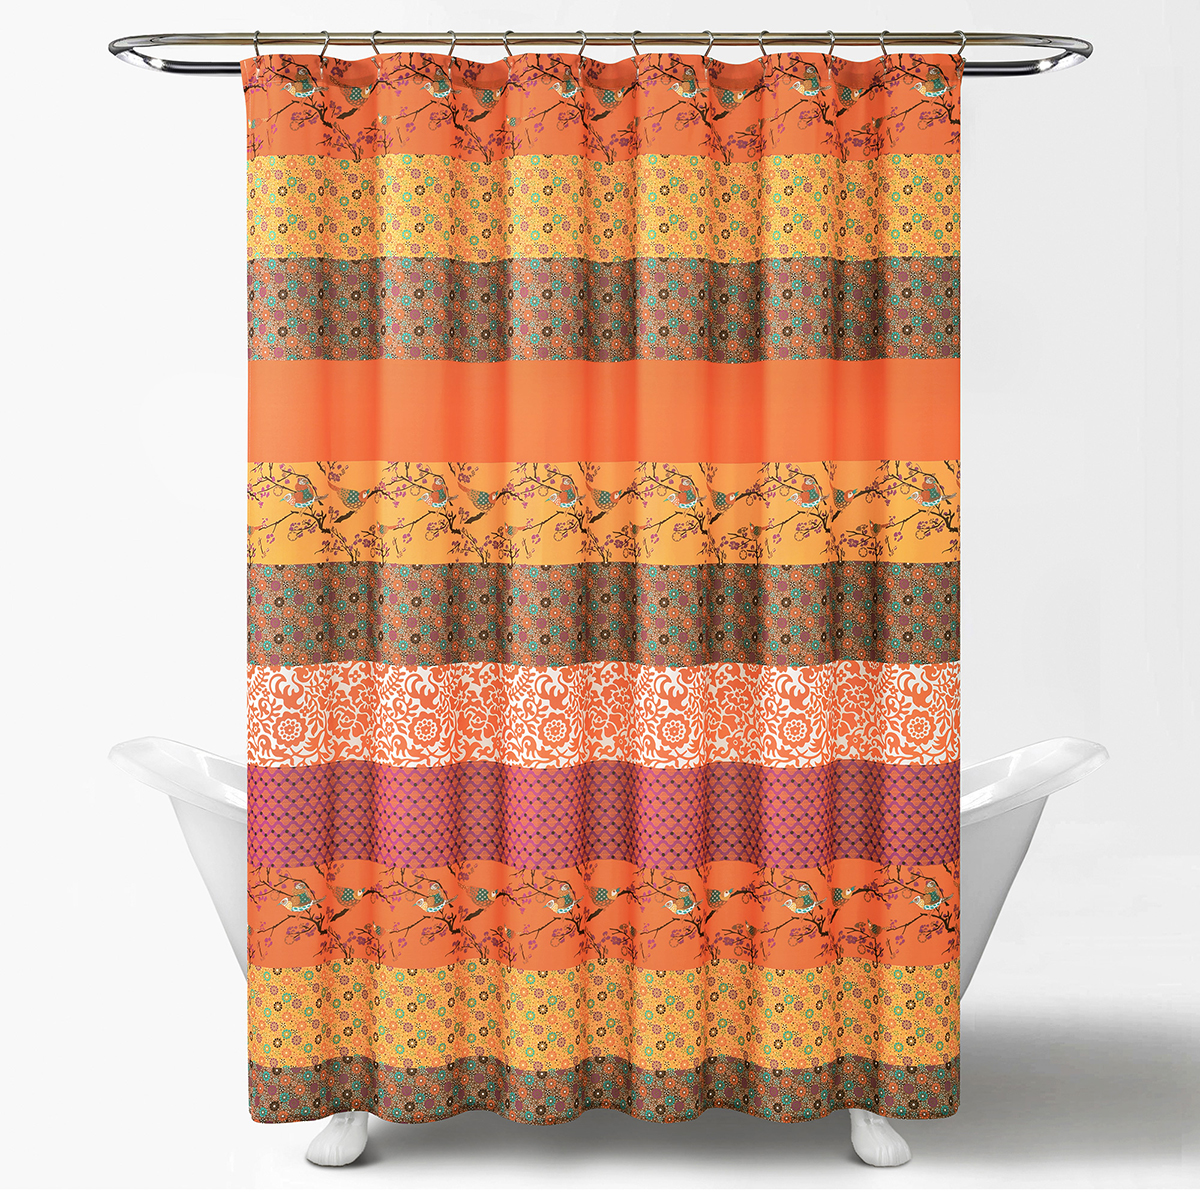 Lush Decor(R) Royal Empire Shower Curtain